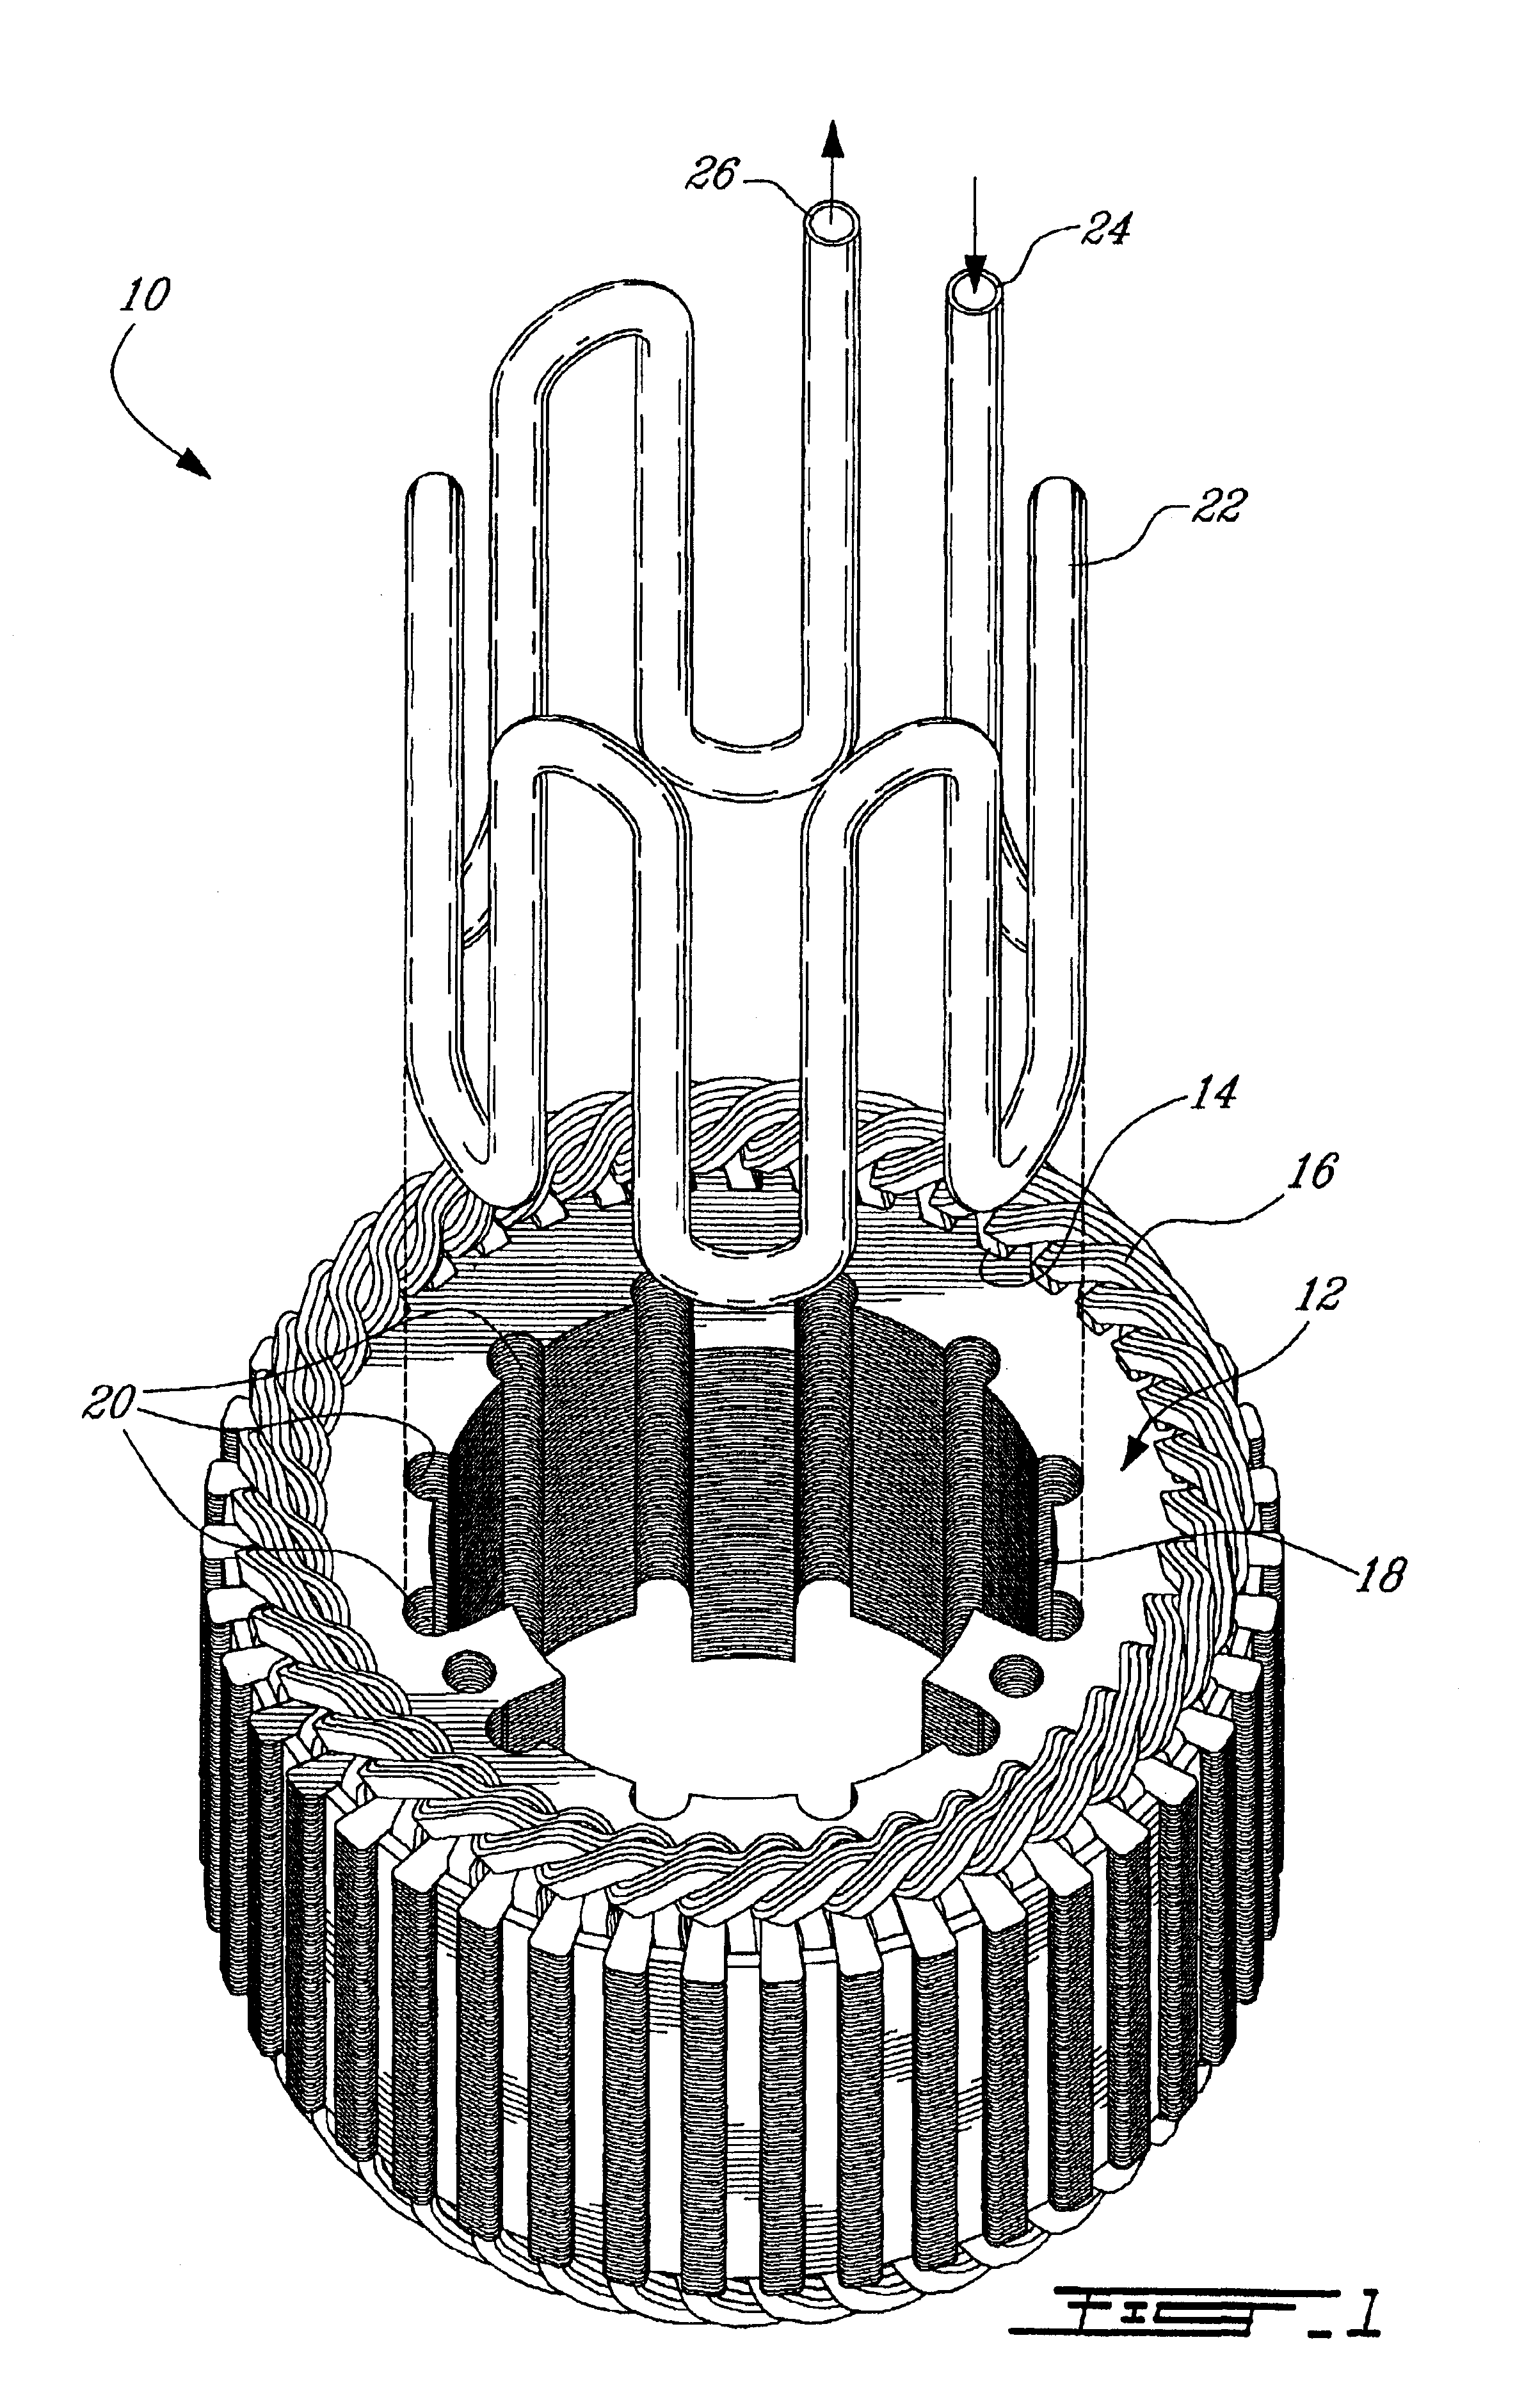 Liquid cooling arrangement for electric machines